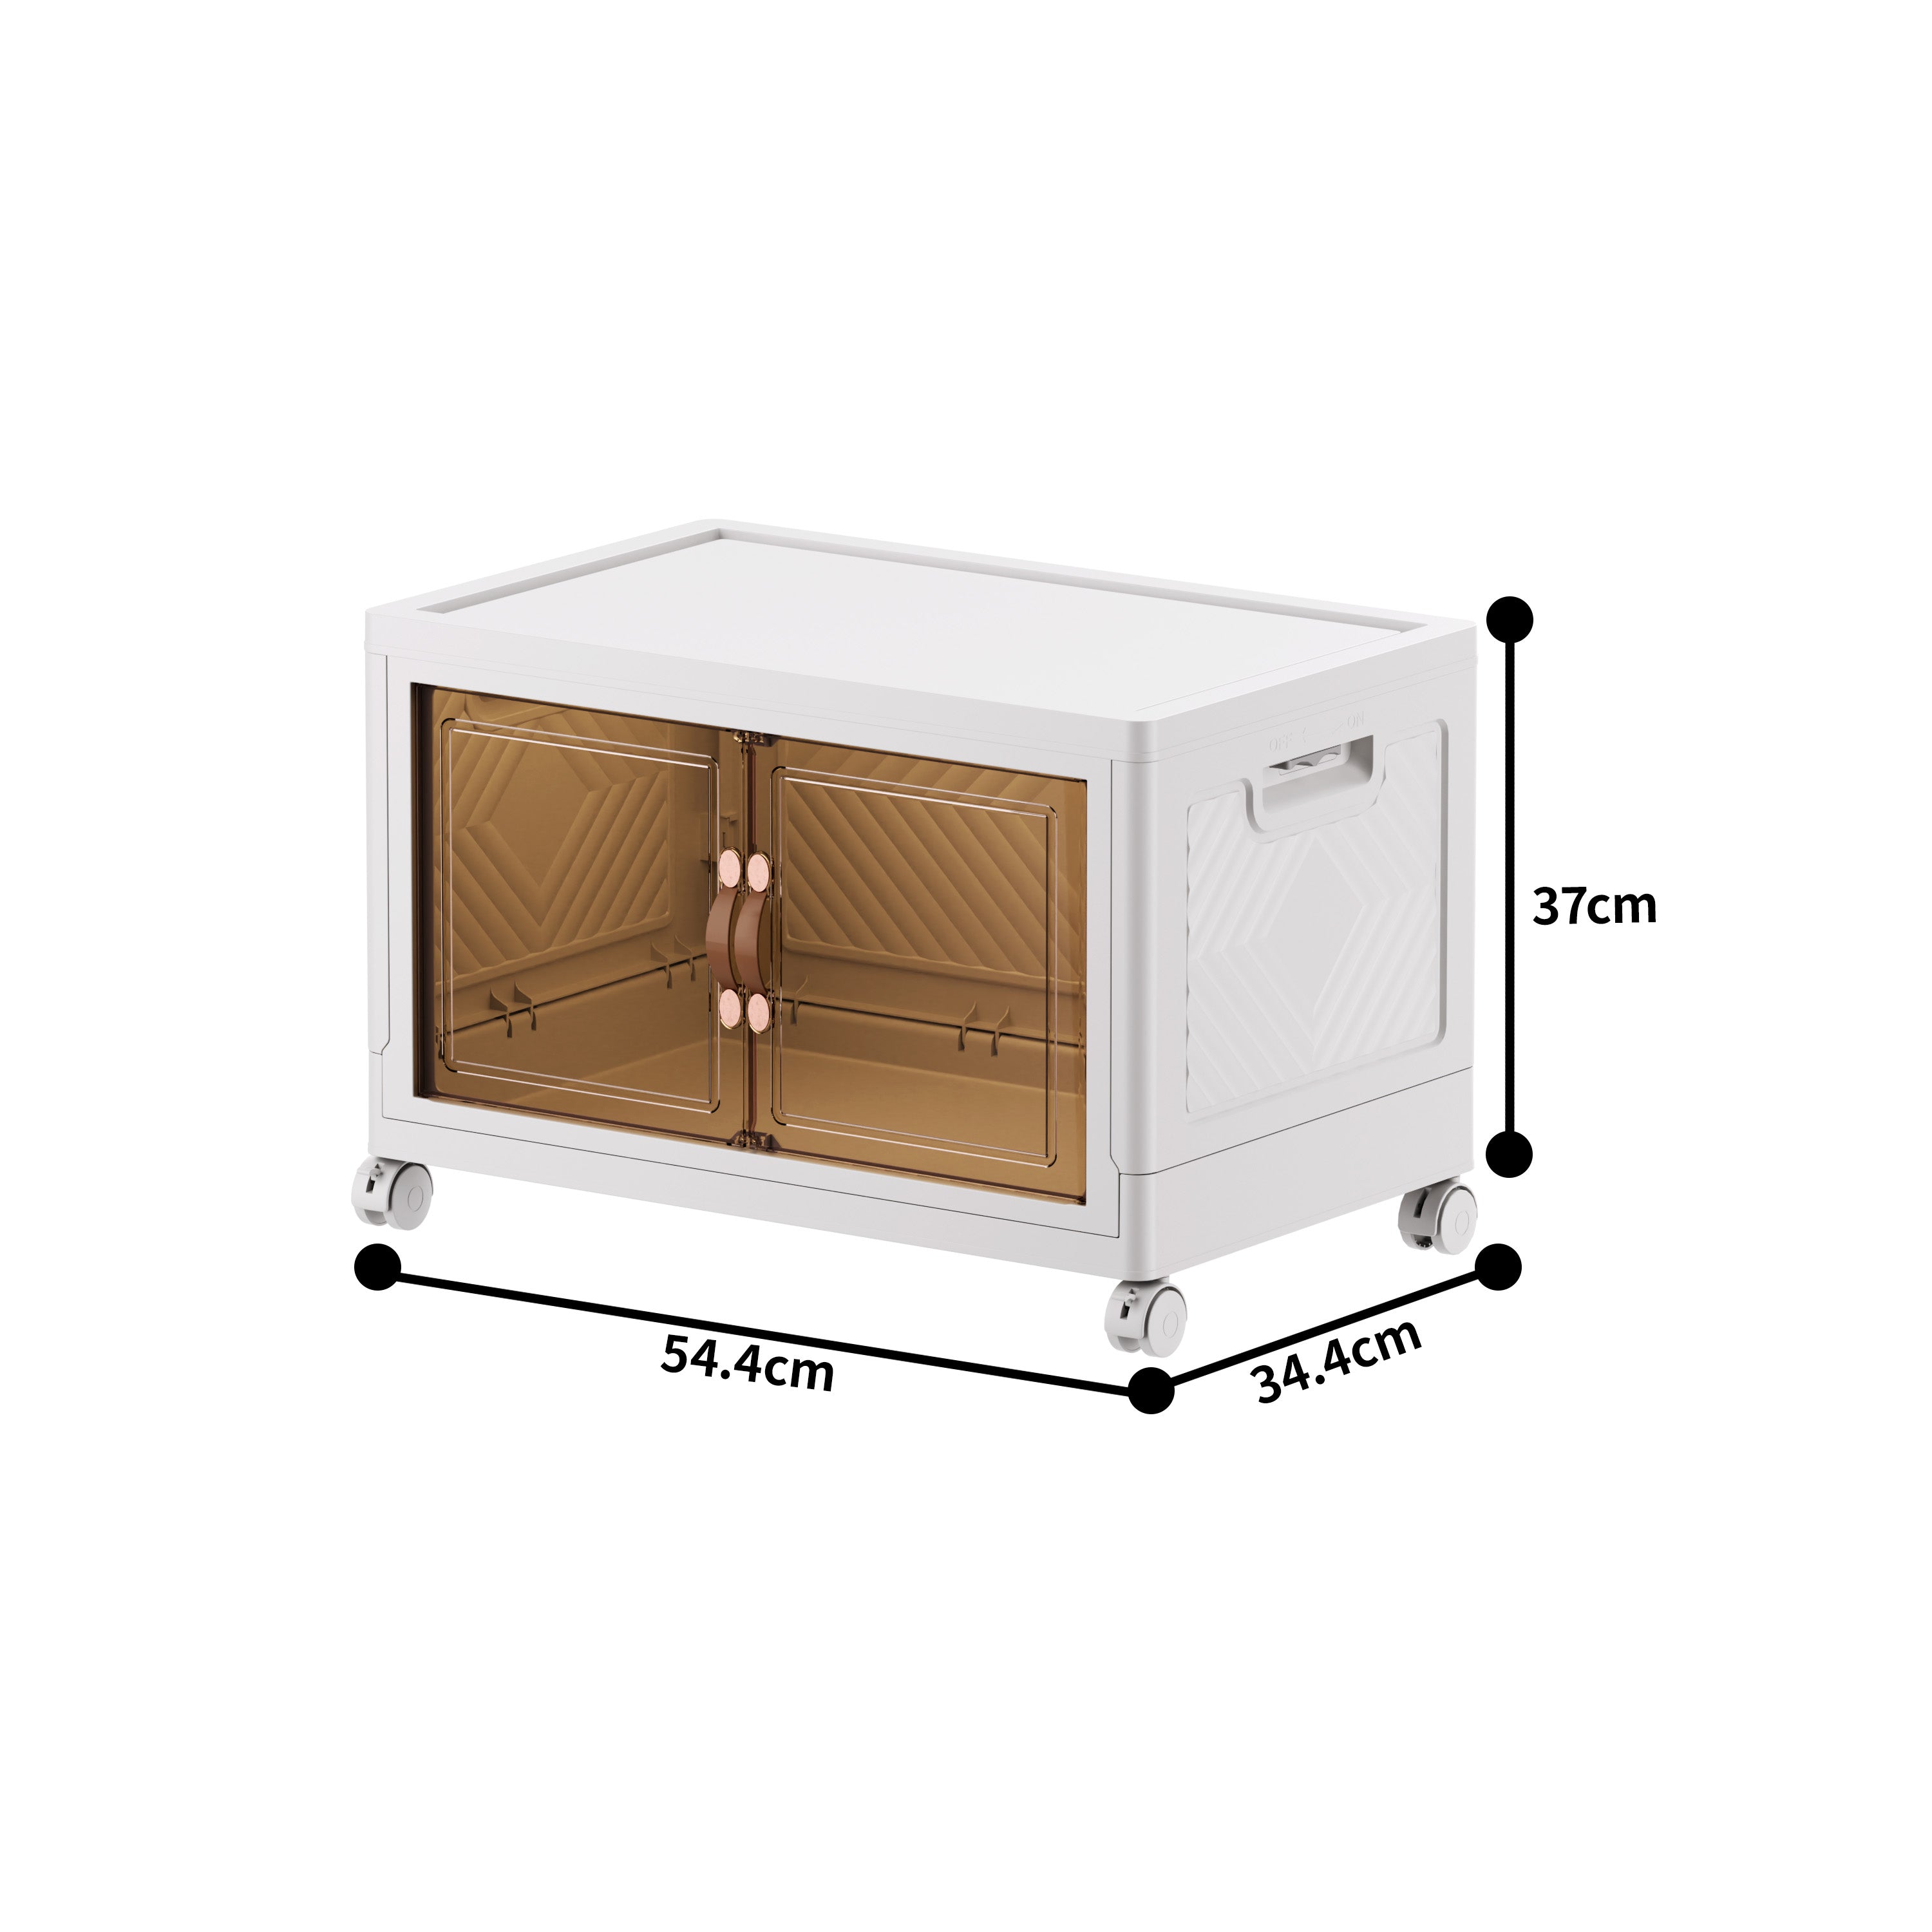 【KSA STOCK】Foldable plastic storage box with wheels and doors, one shelf, medium size, 36*55cm  NK007